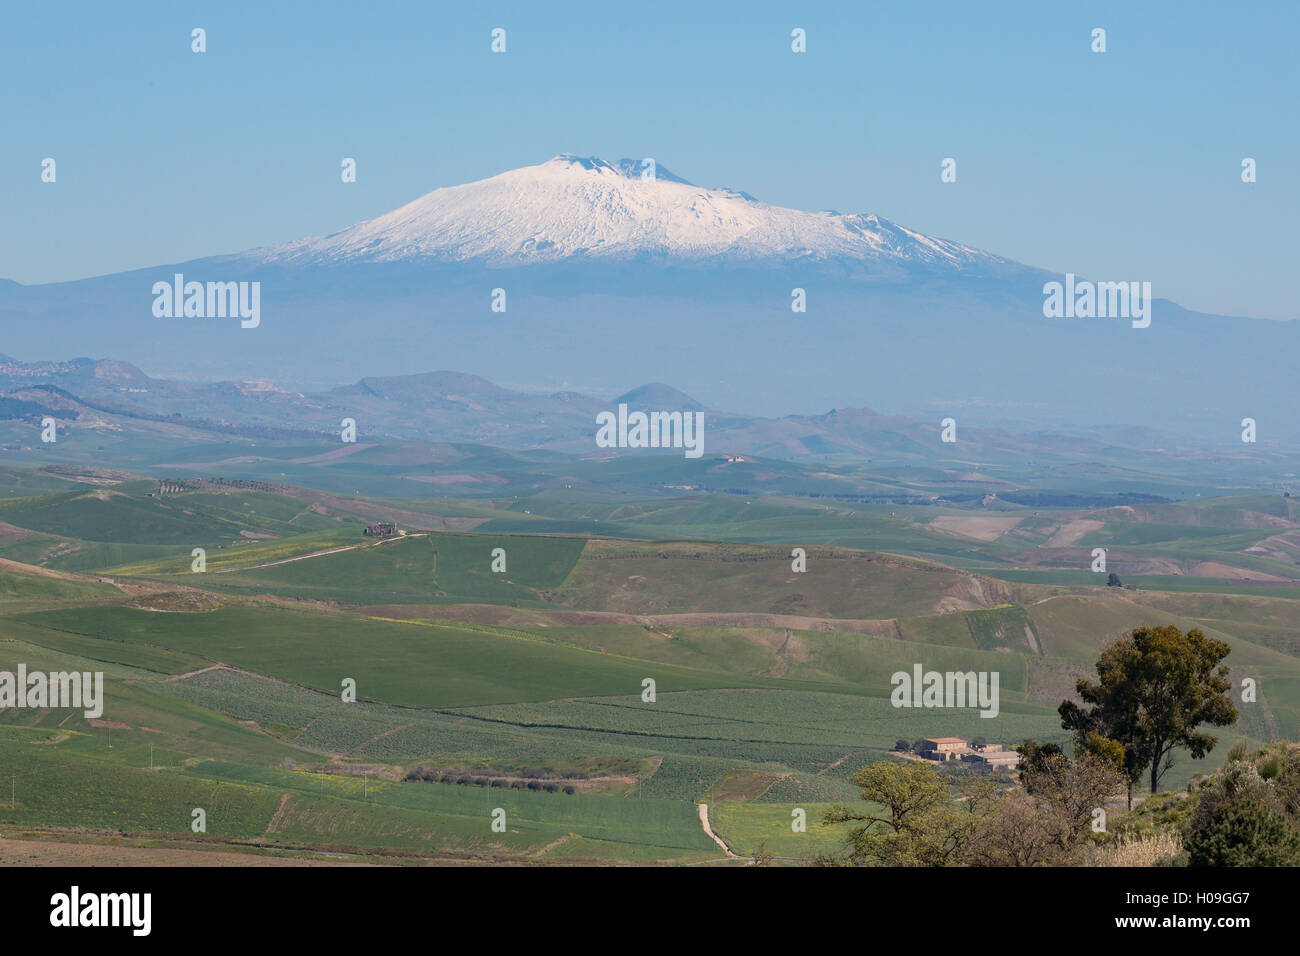 Die ehrfurchtgebietenden Ätna, UNESCO-Weltkulturerbe und höchste aktive Vulkan Europas, Sizilien, Italien, Europa Stockfoto